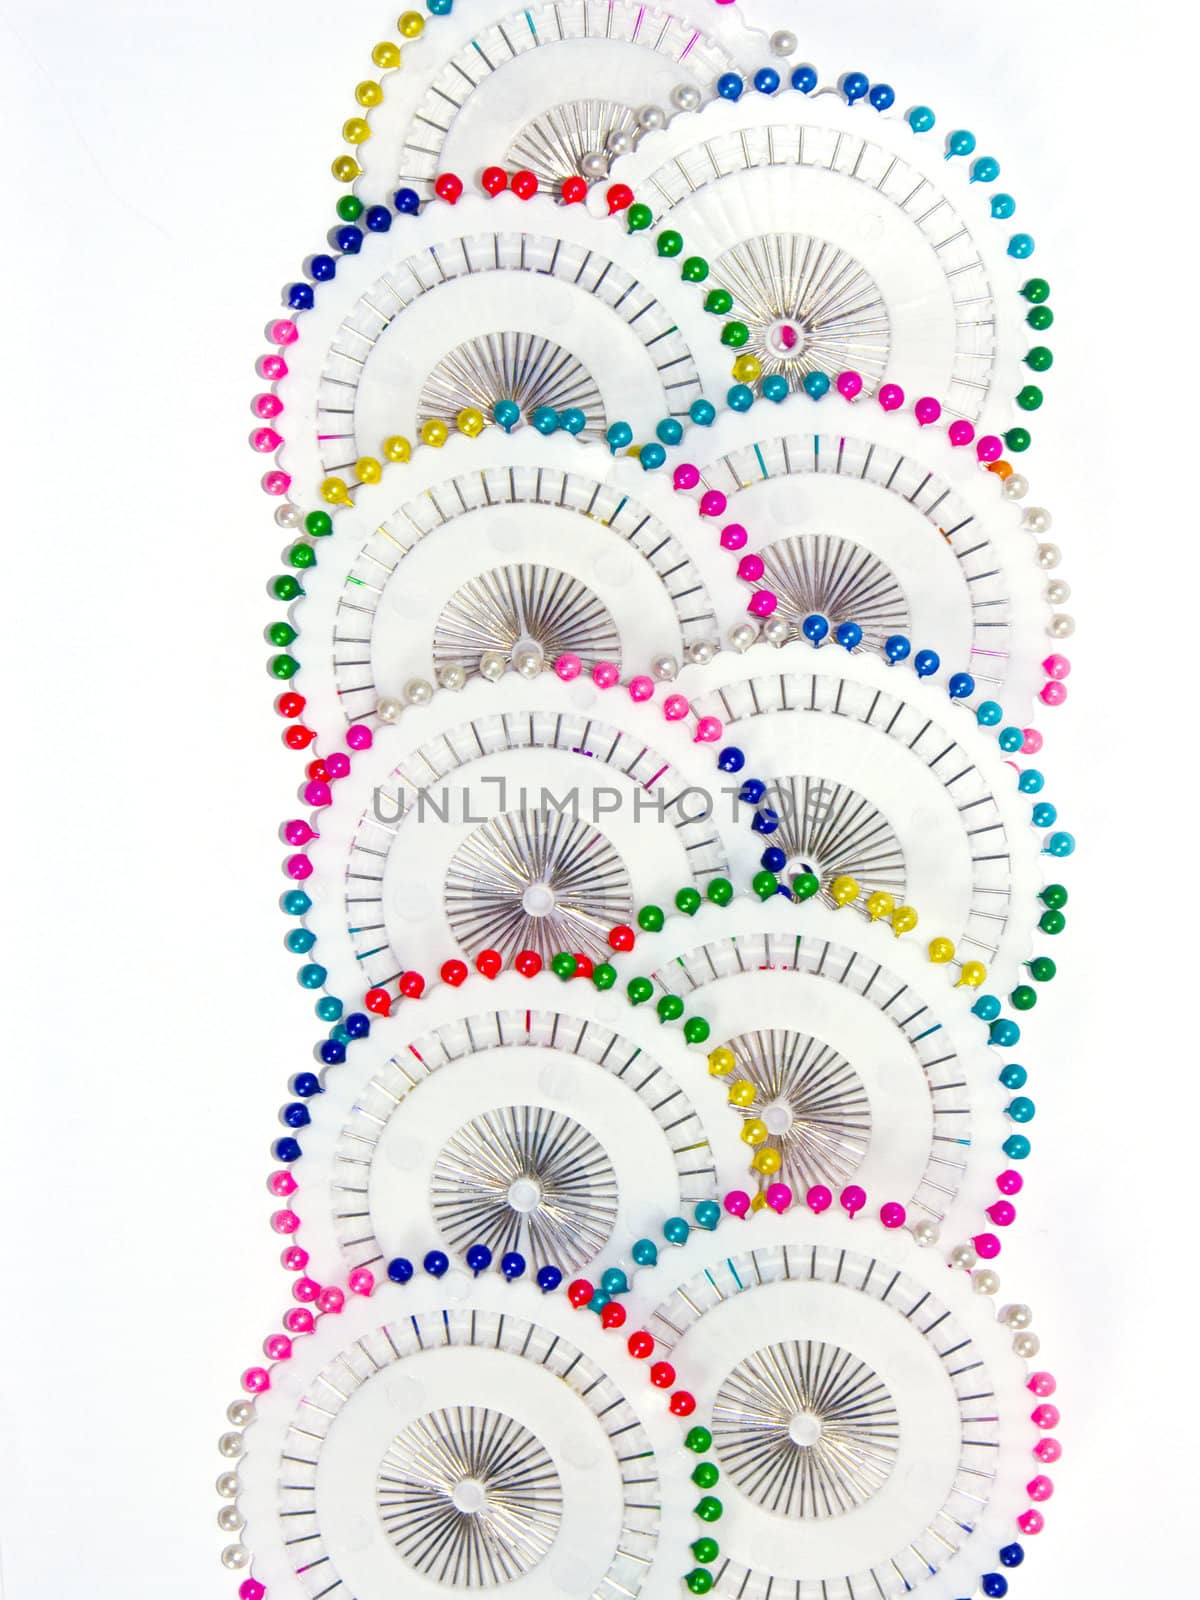 Multi-coloured needles 15 by soloir